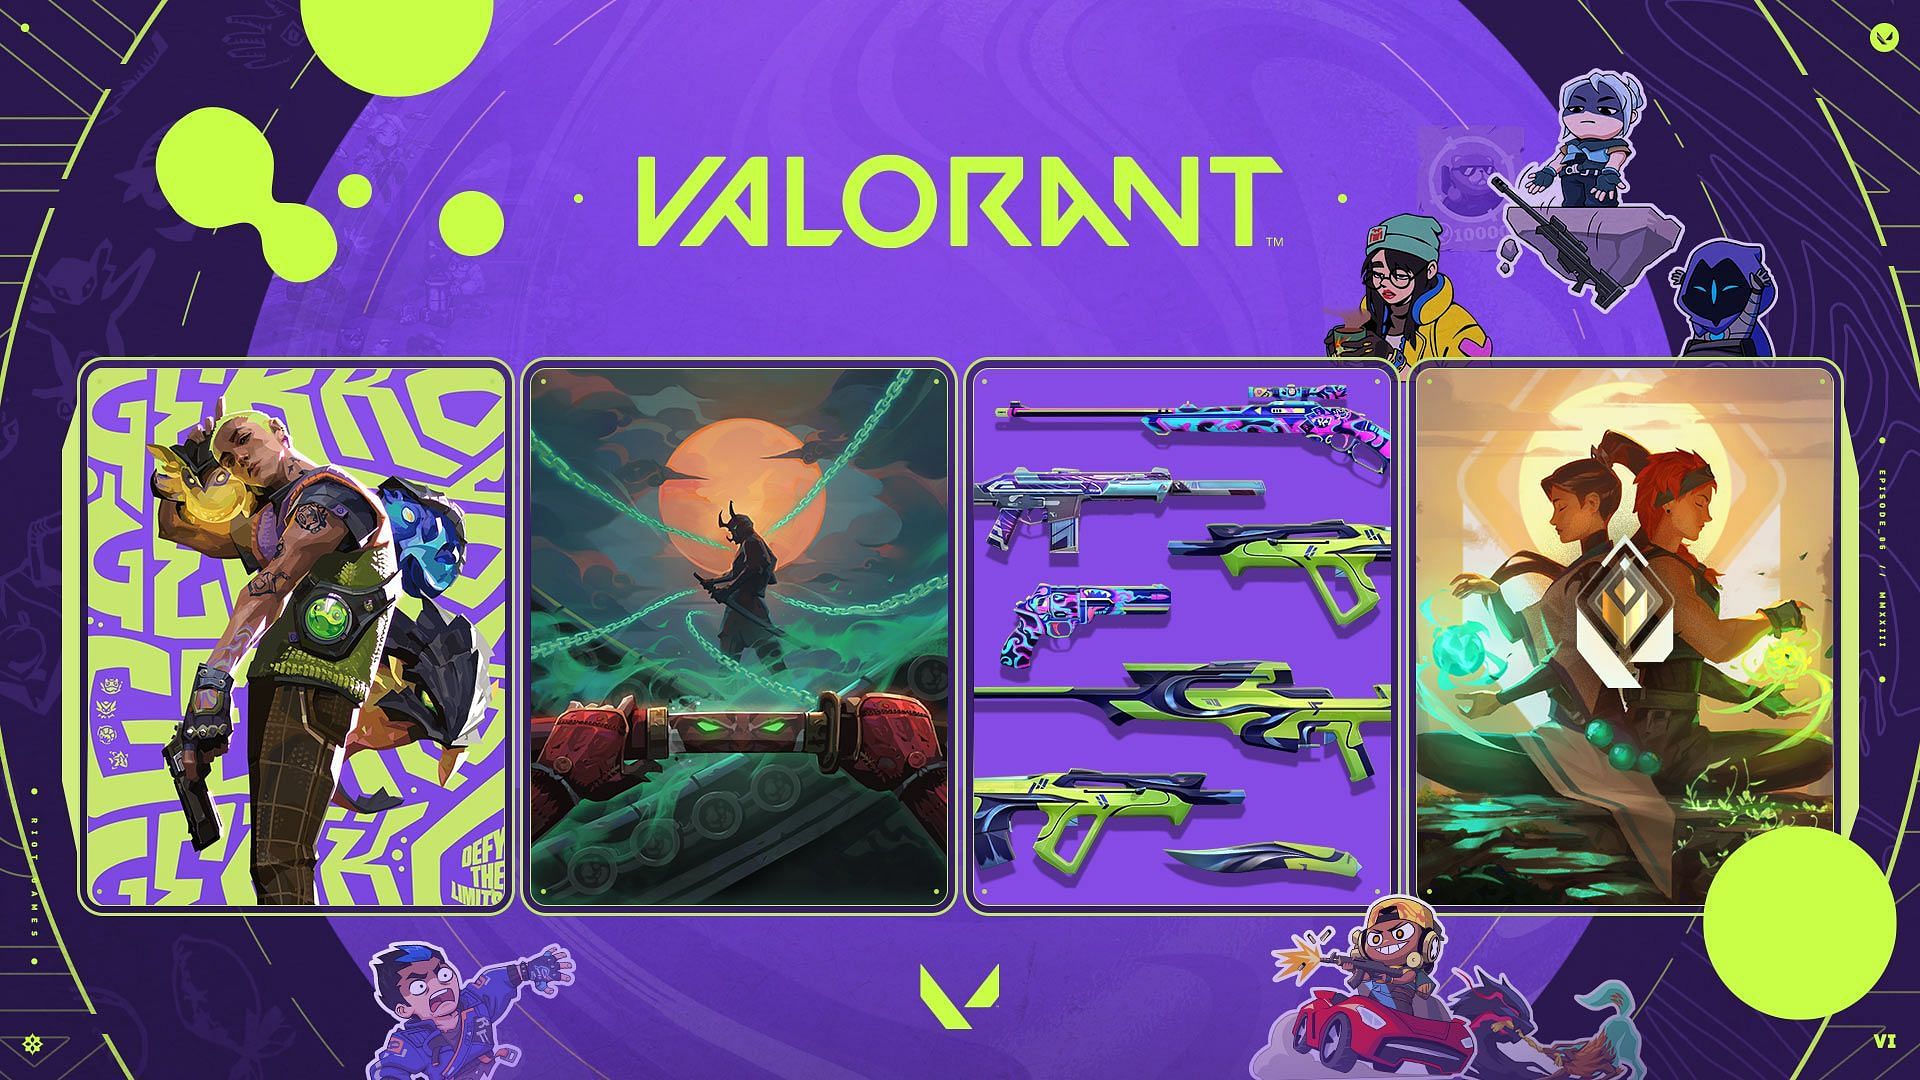 Valorant Episode 6 Act 2 content (Image via Riot Games)